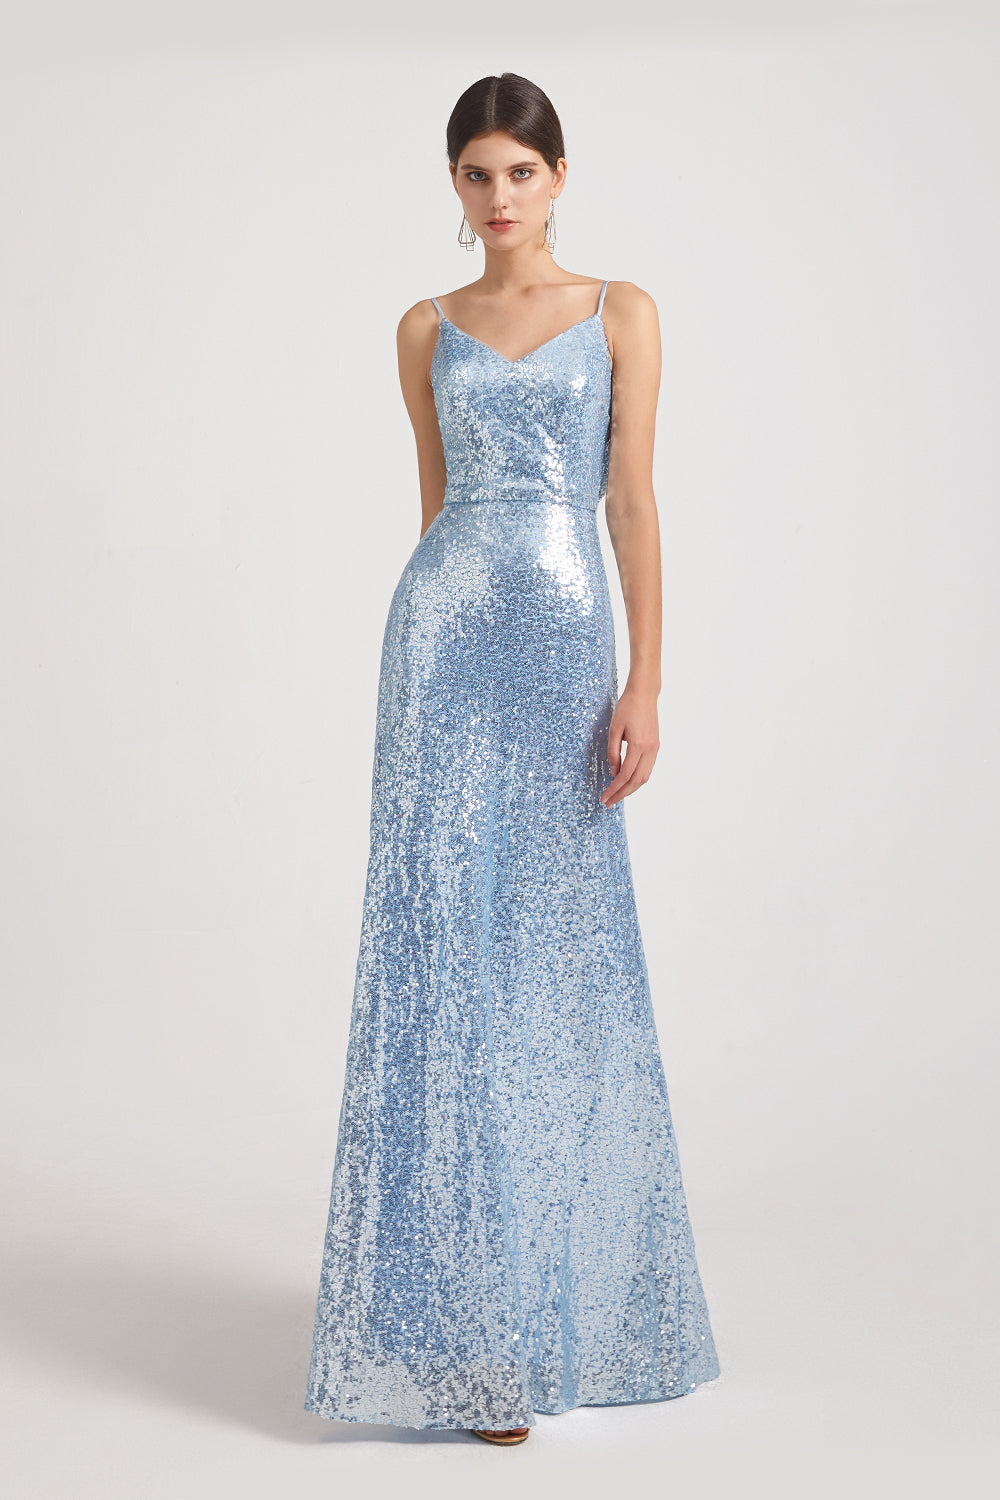 blue stunning spaghetti straps bridesmaids dress